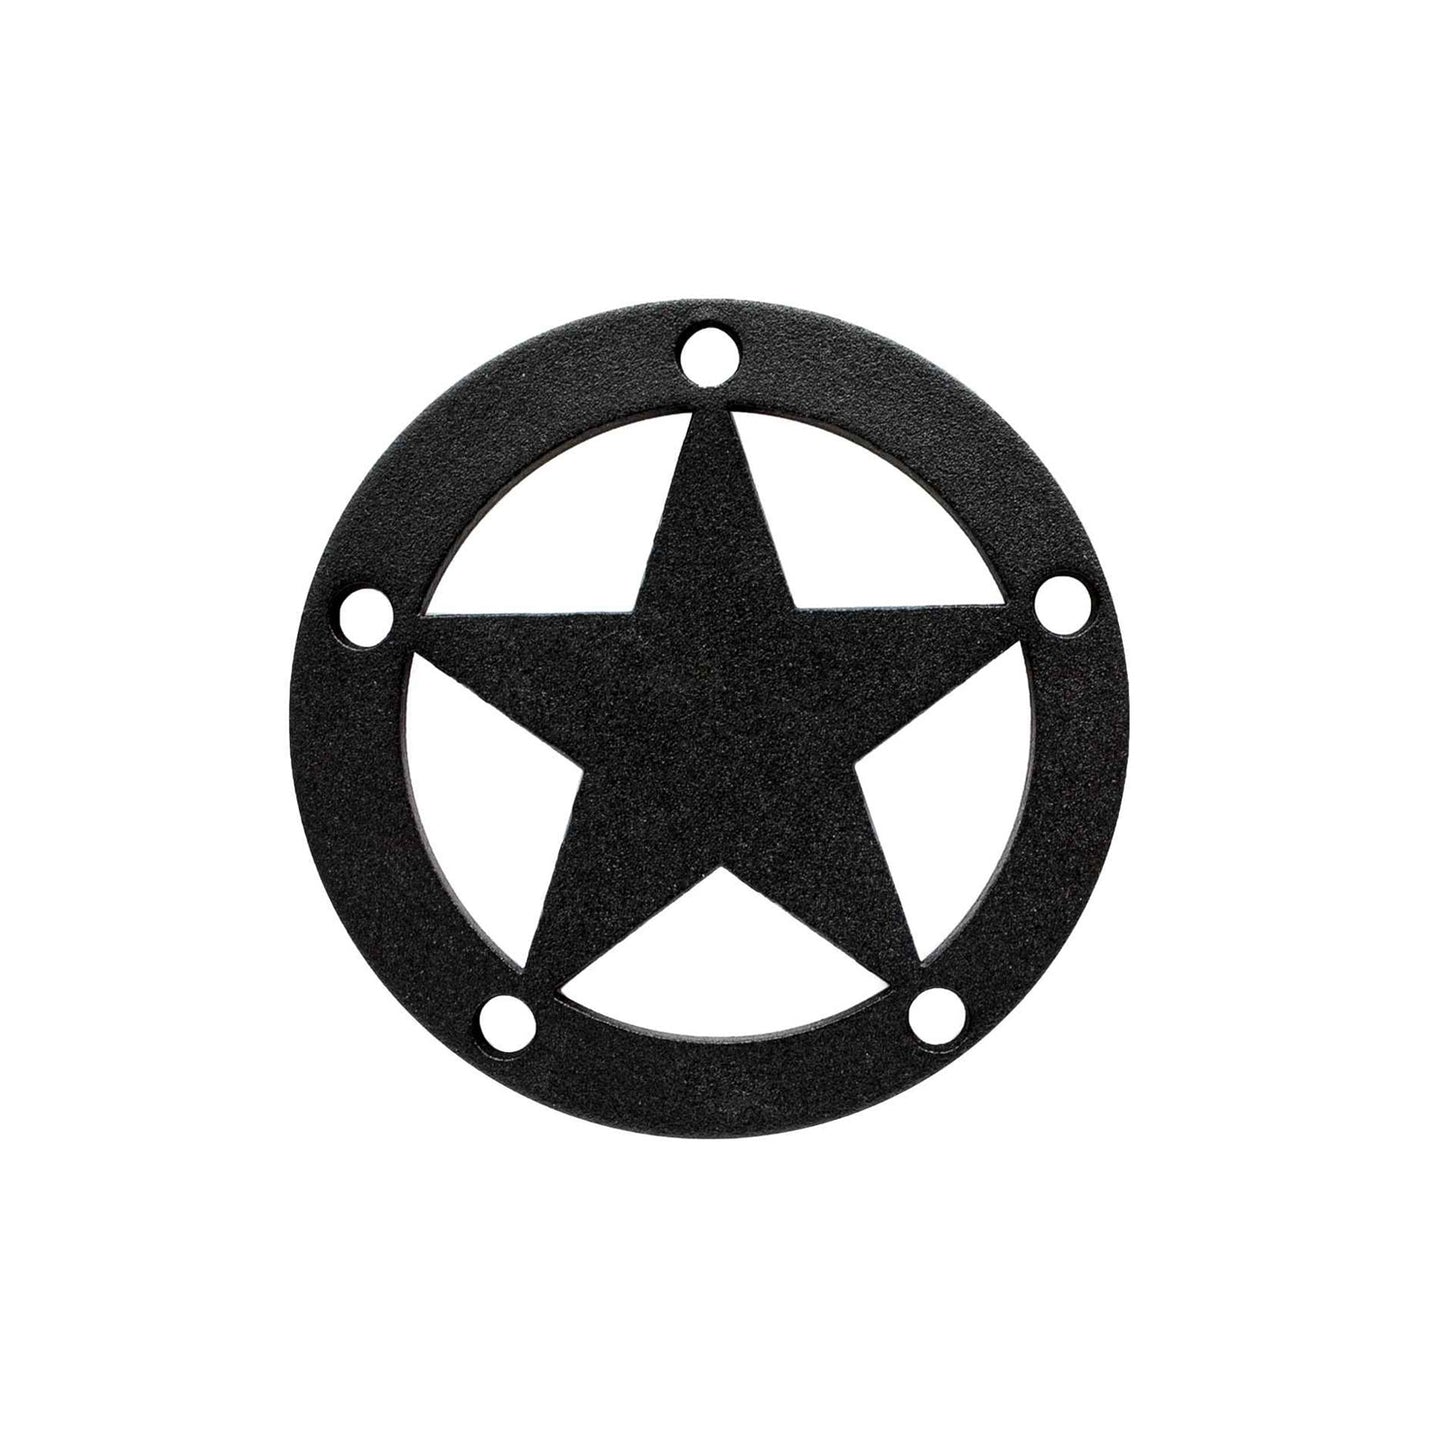 Simpson APDTS3 Decorative Star Black Powder Coat 